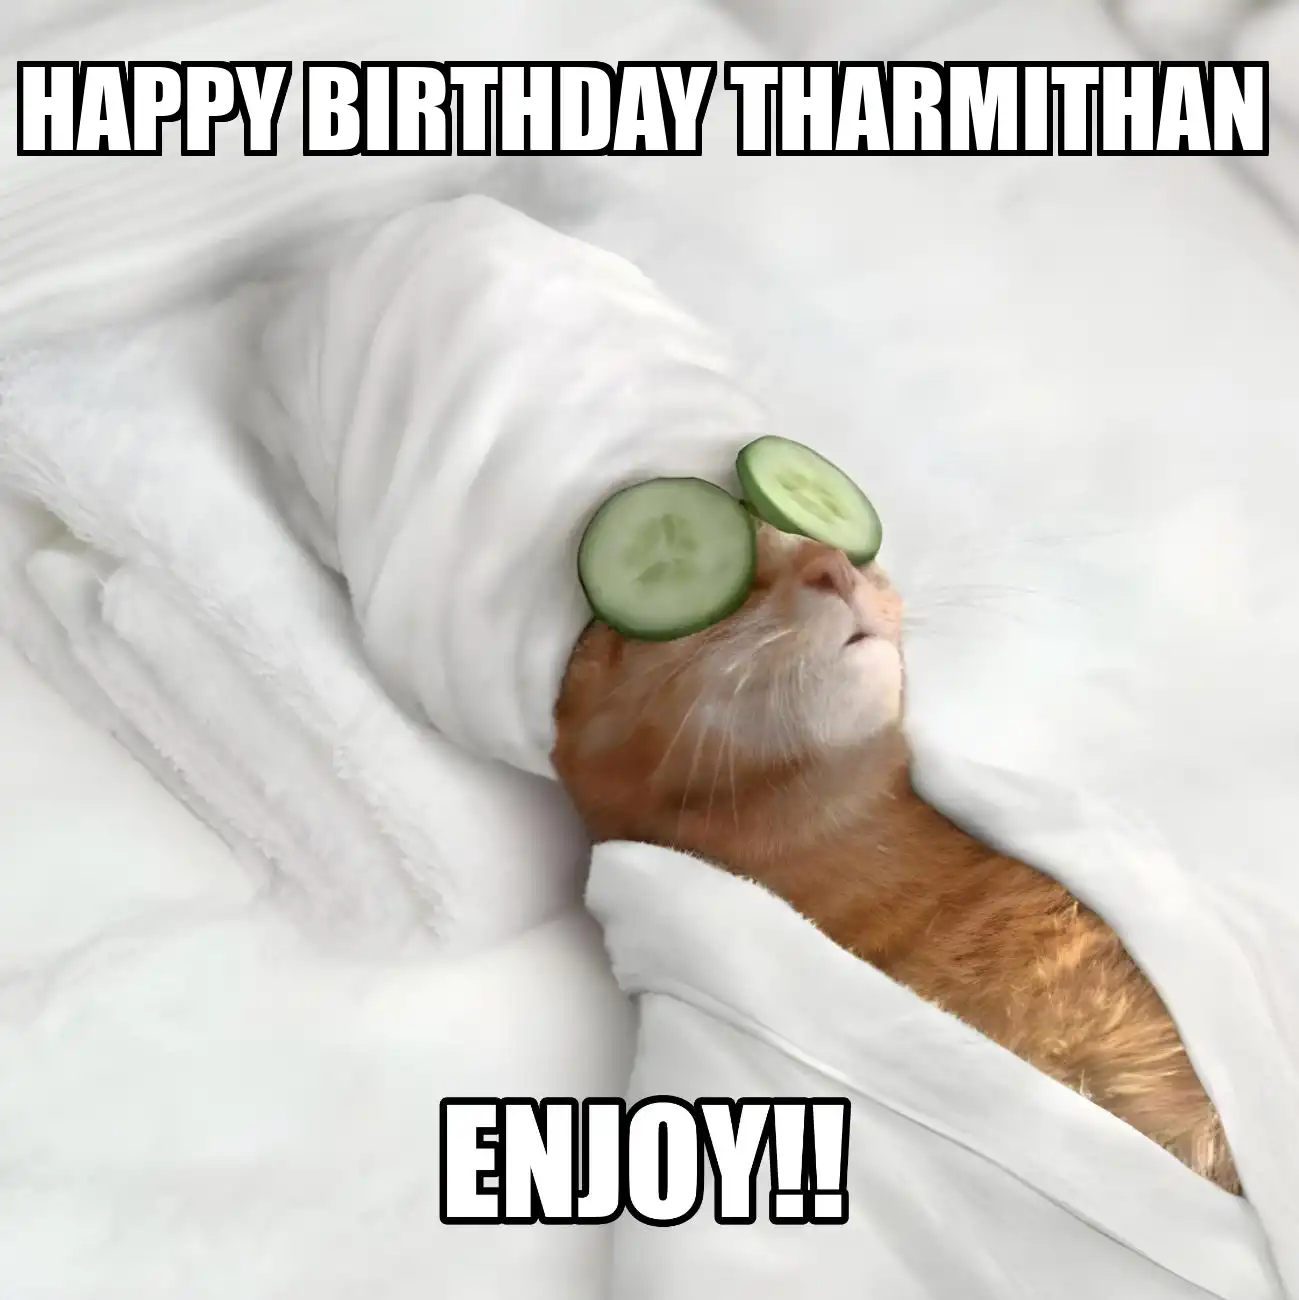 Happy Birthday Tharmithan Enjoy Cat Meme